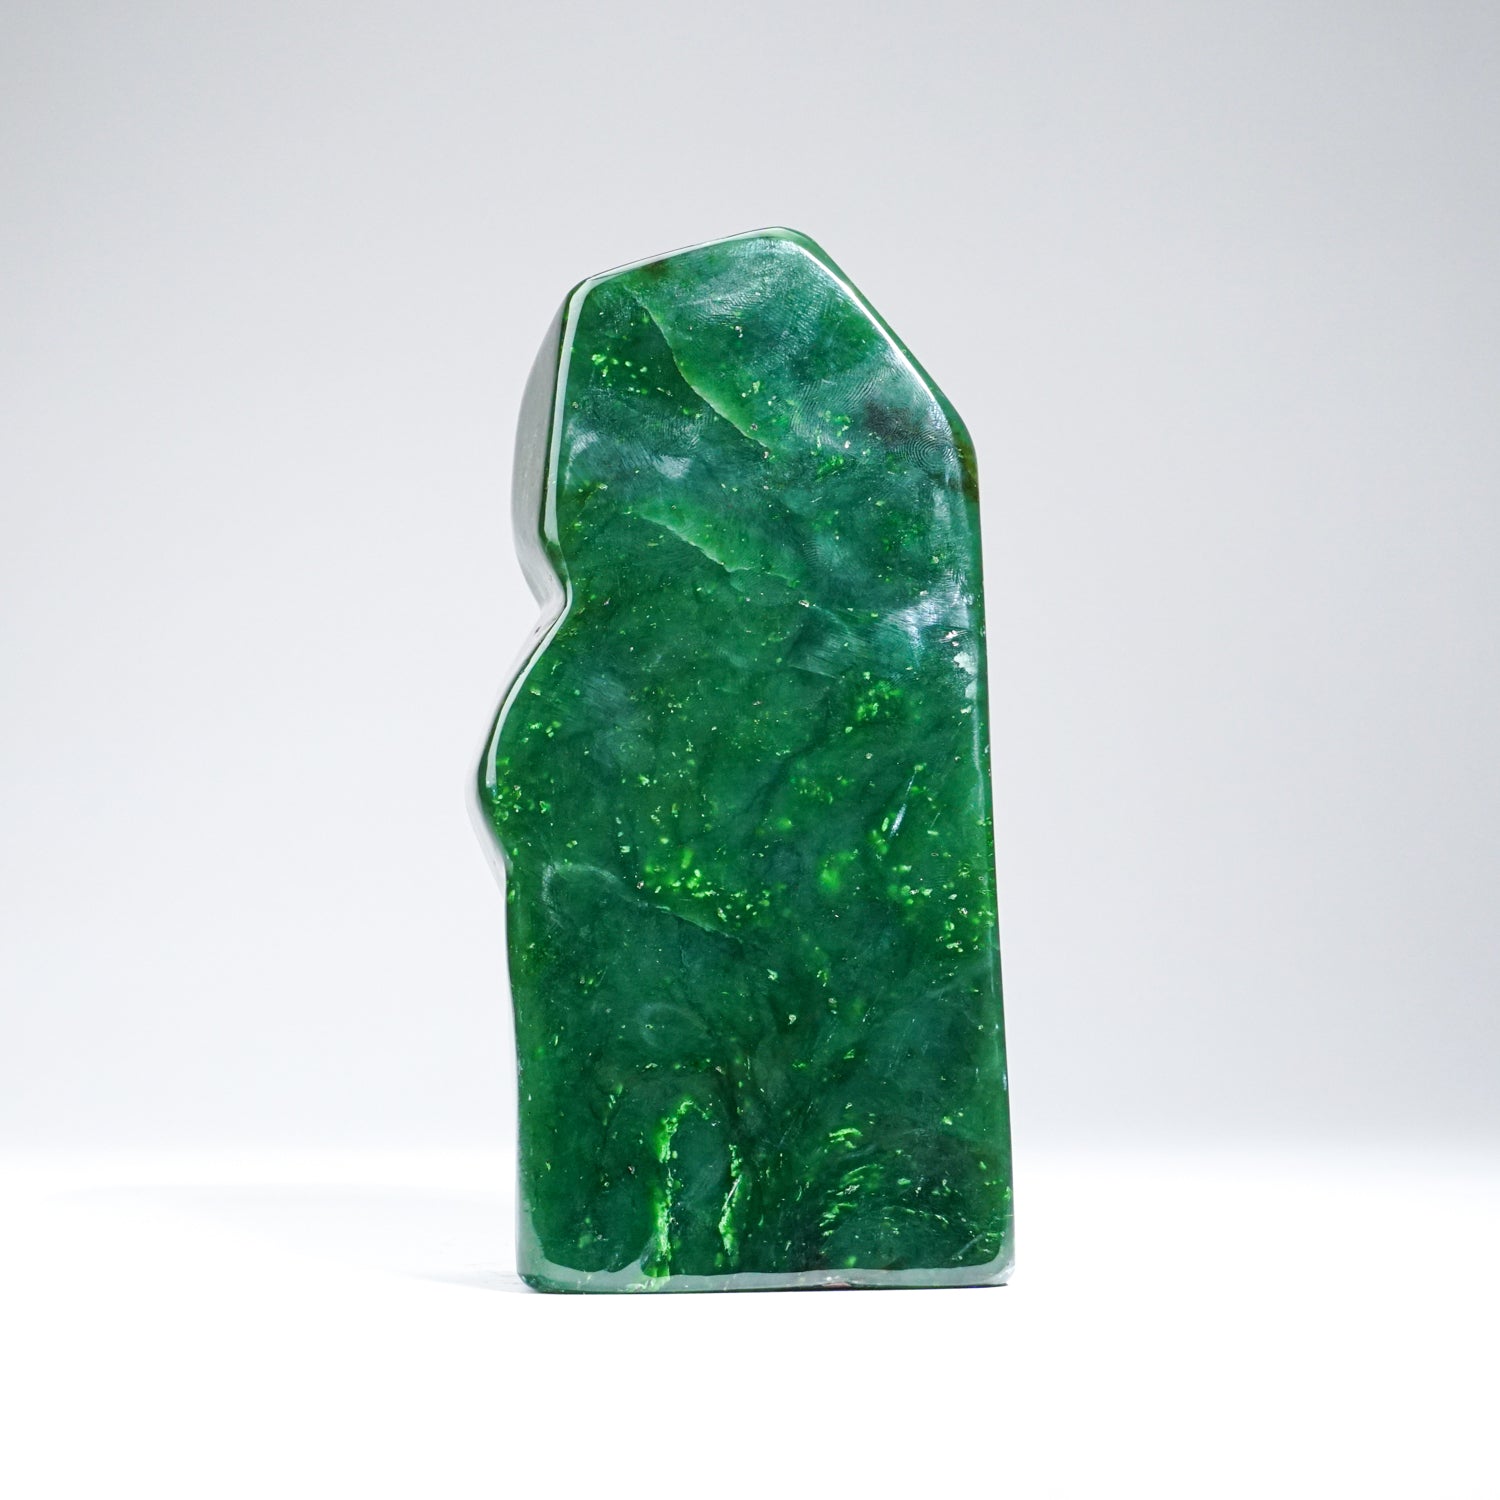 Polished Nephrite Jade Freeform from Pakistan (4.4 lbs)